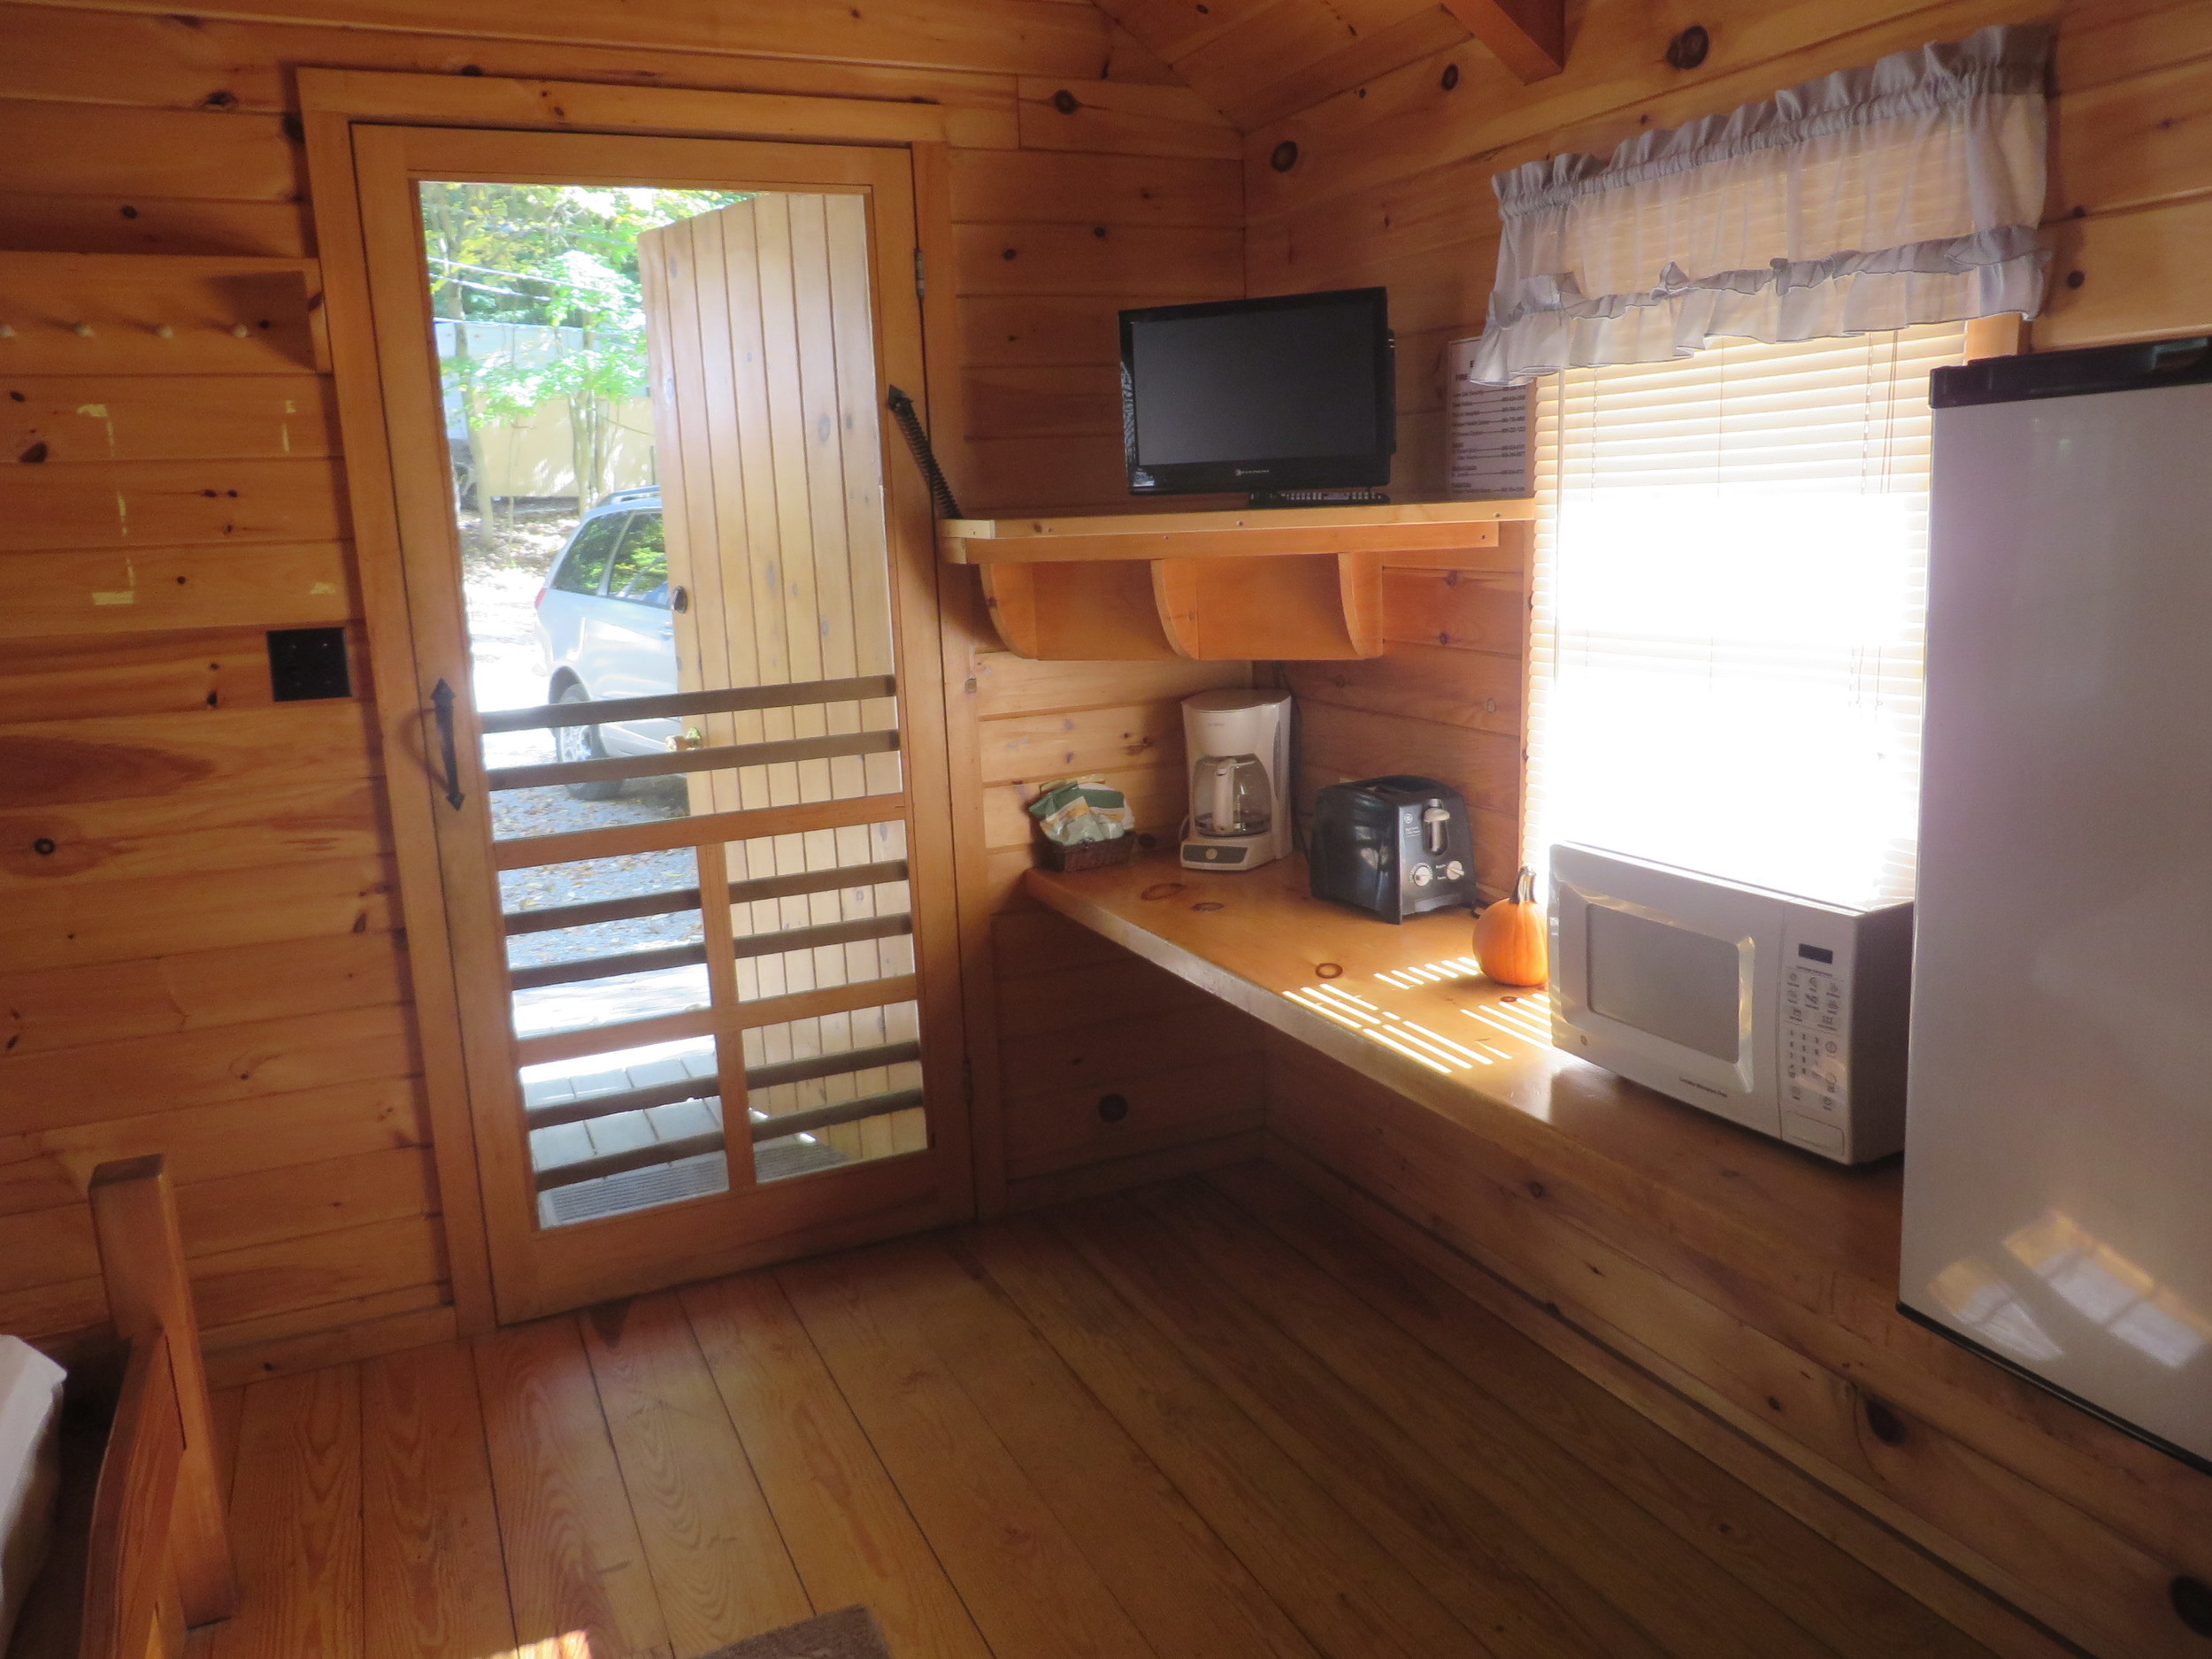 front door and kitchenette in cabin